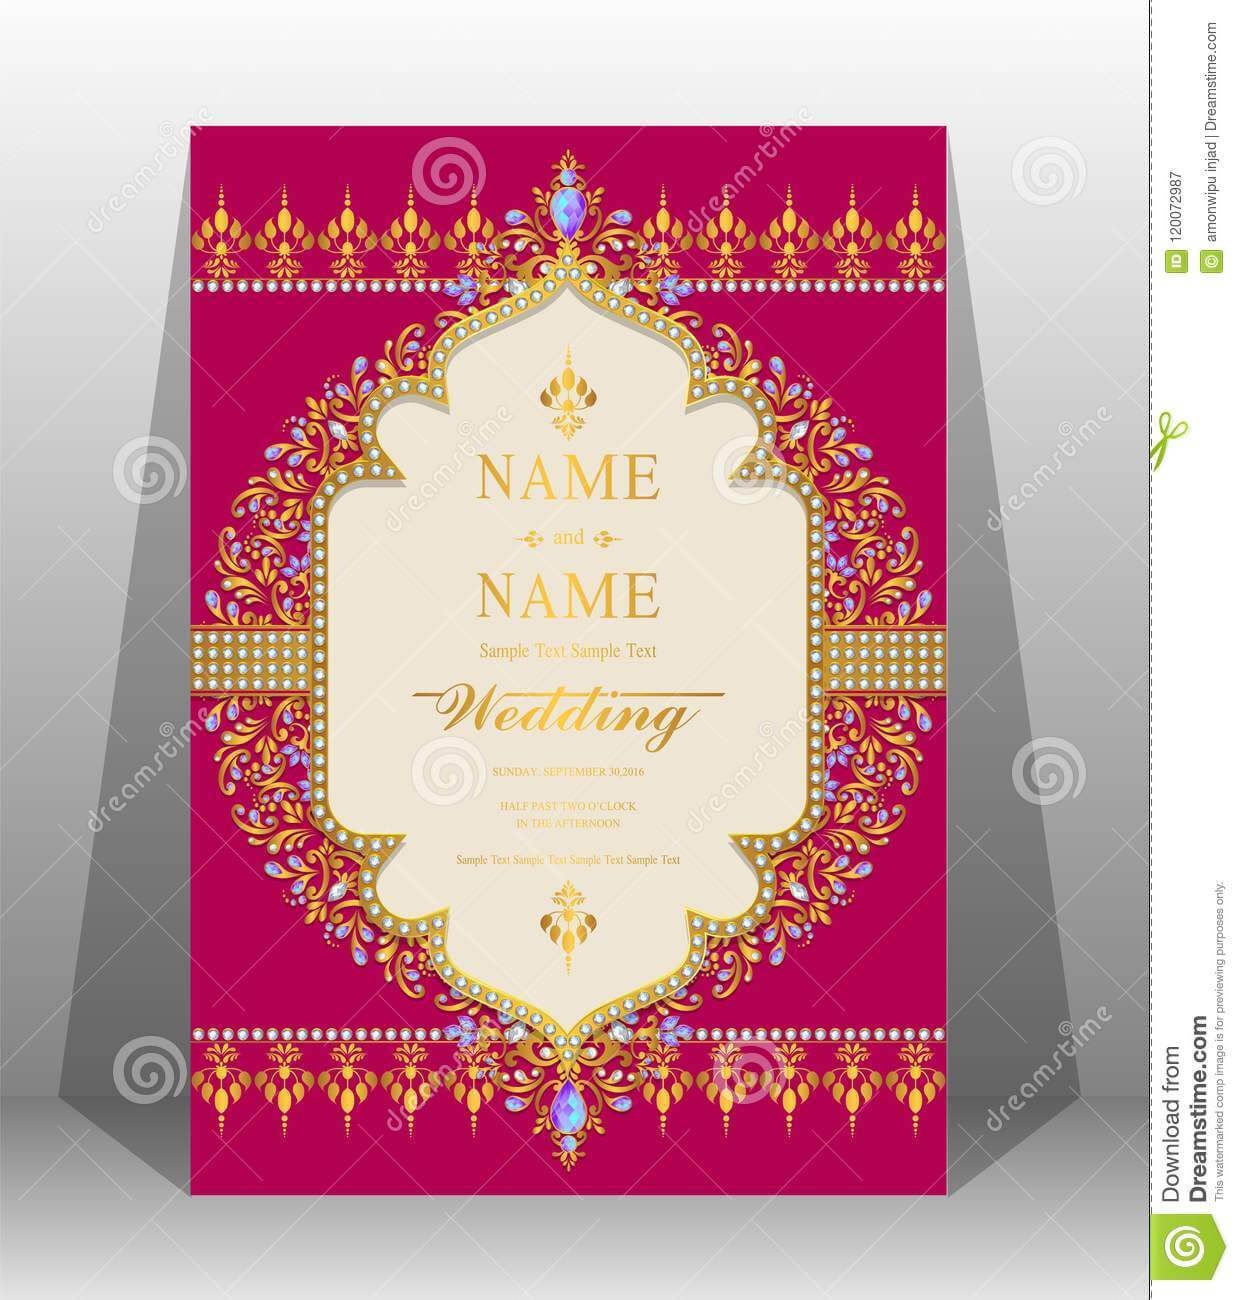 Wedding Invitation Card Templates . Stock Vector Throughout Free E Wedding Invitation Card Templates